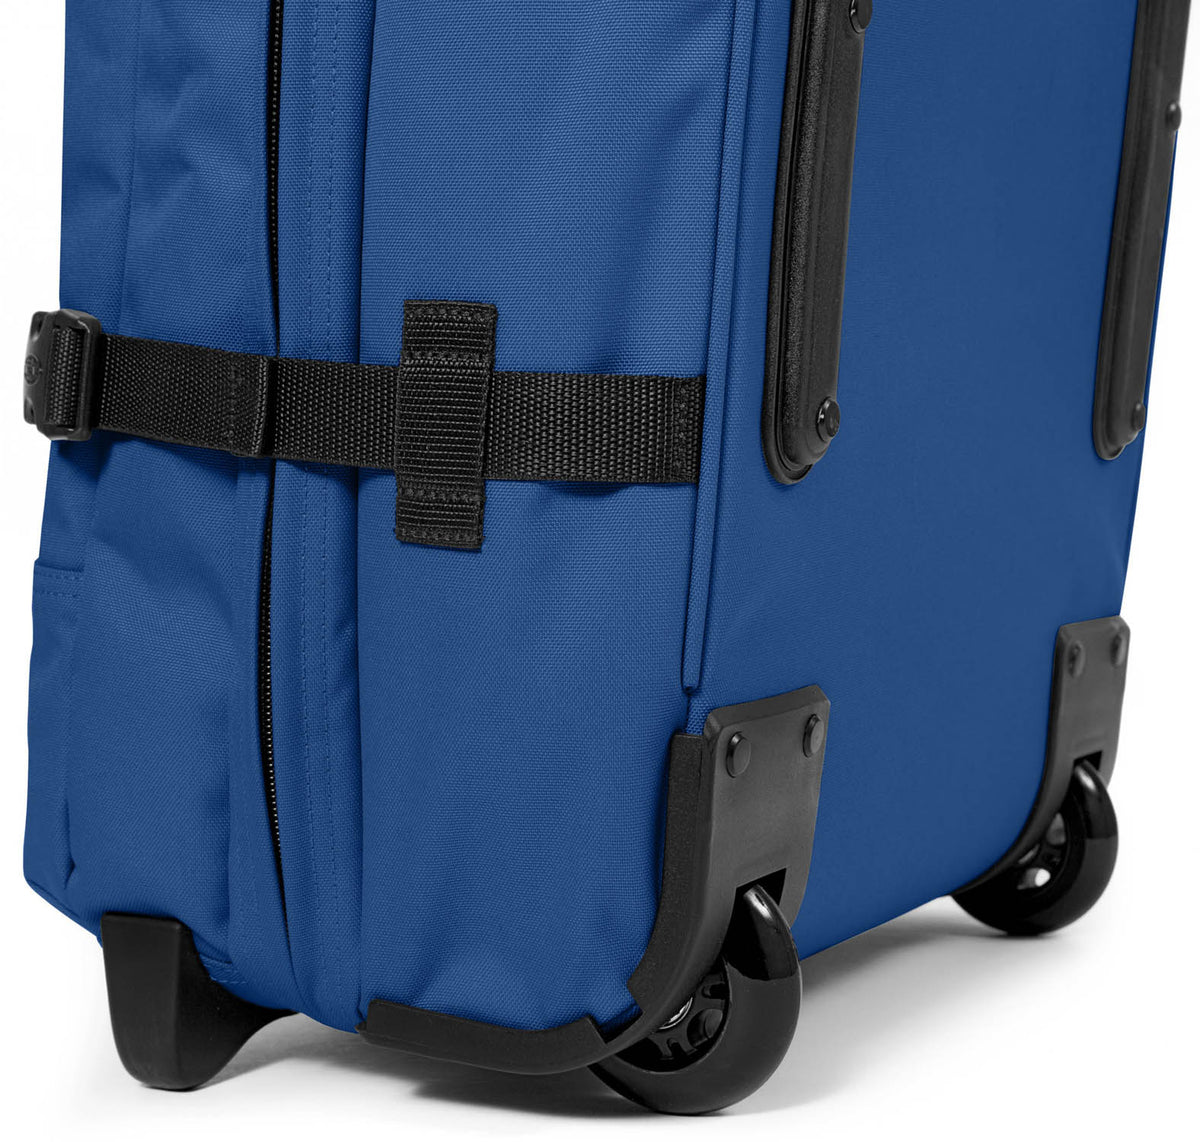 Eastpak Tranverz L Suitcase - Charged Blue